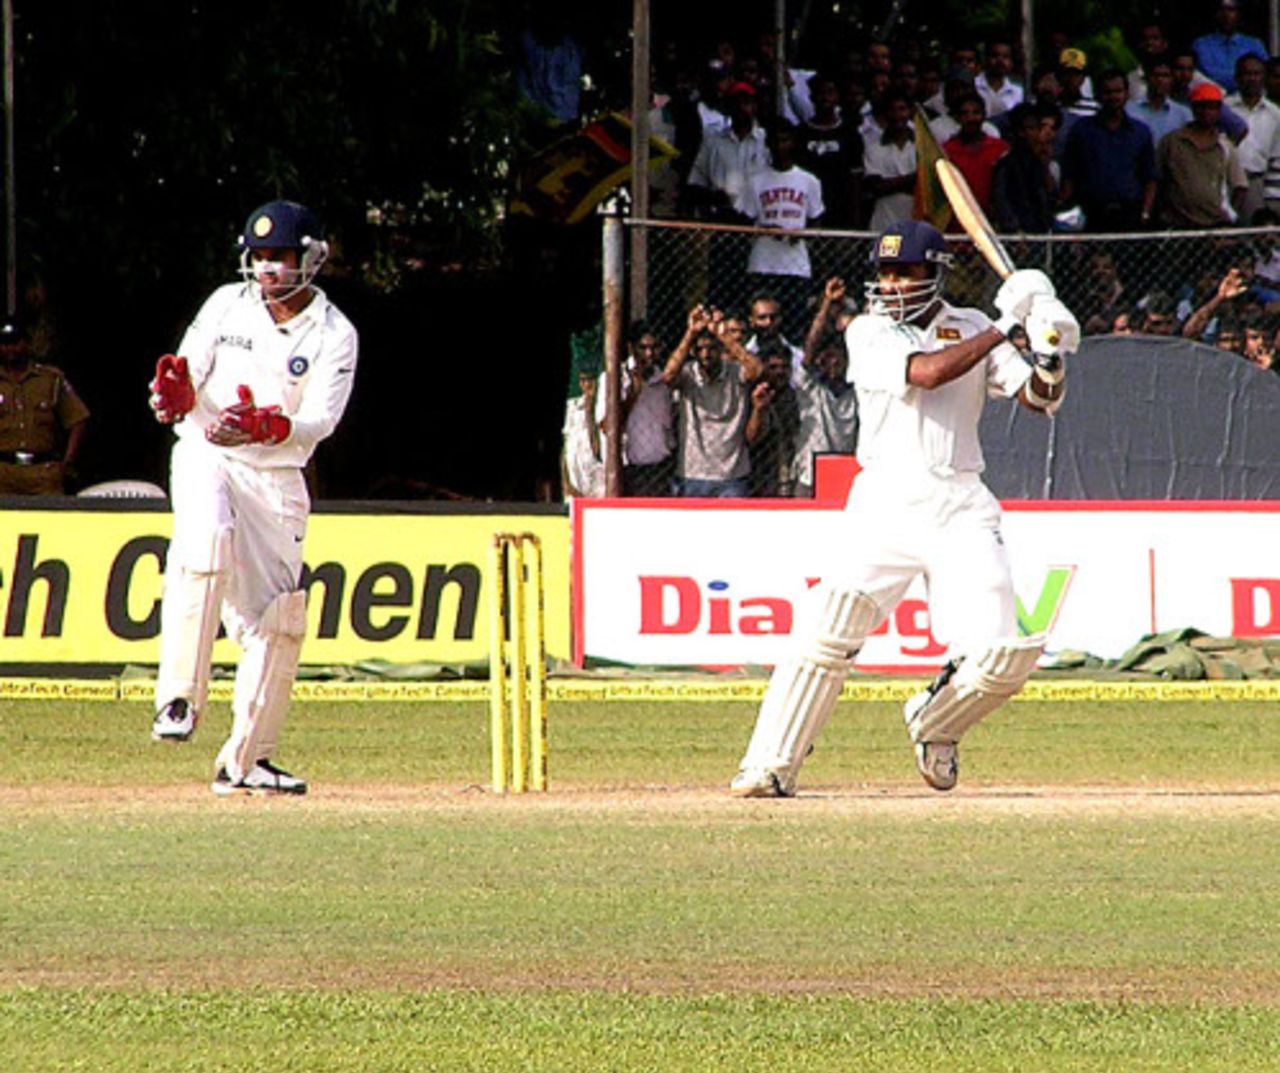 Mahela Jayawardene reaches his half-century while hitting the winning runs, Sri Lanka v India, 3rd Test, PSS, Colombo, 4th day, August 11, 2008